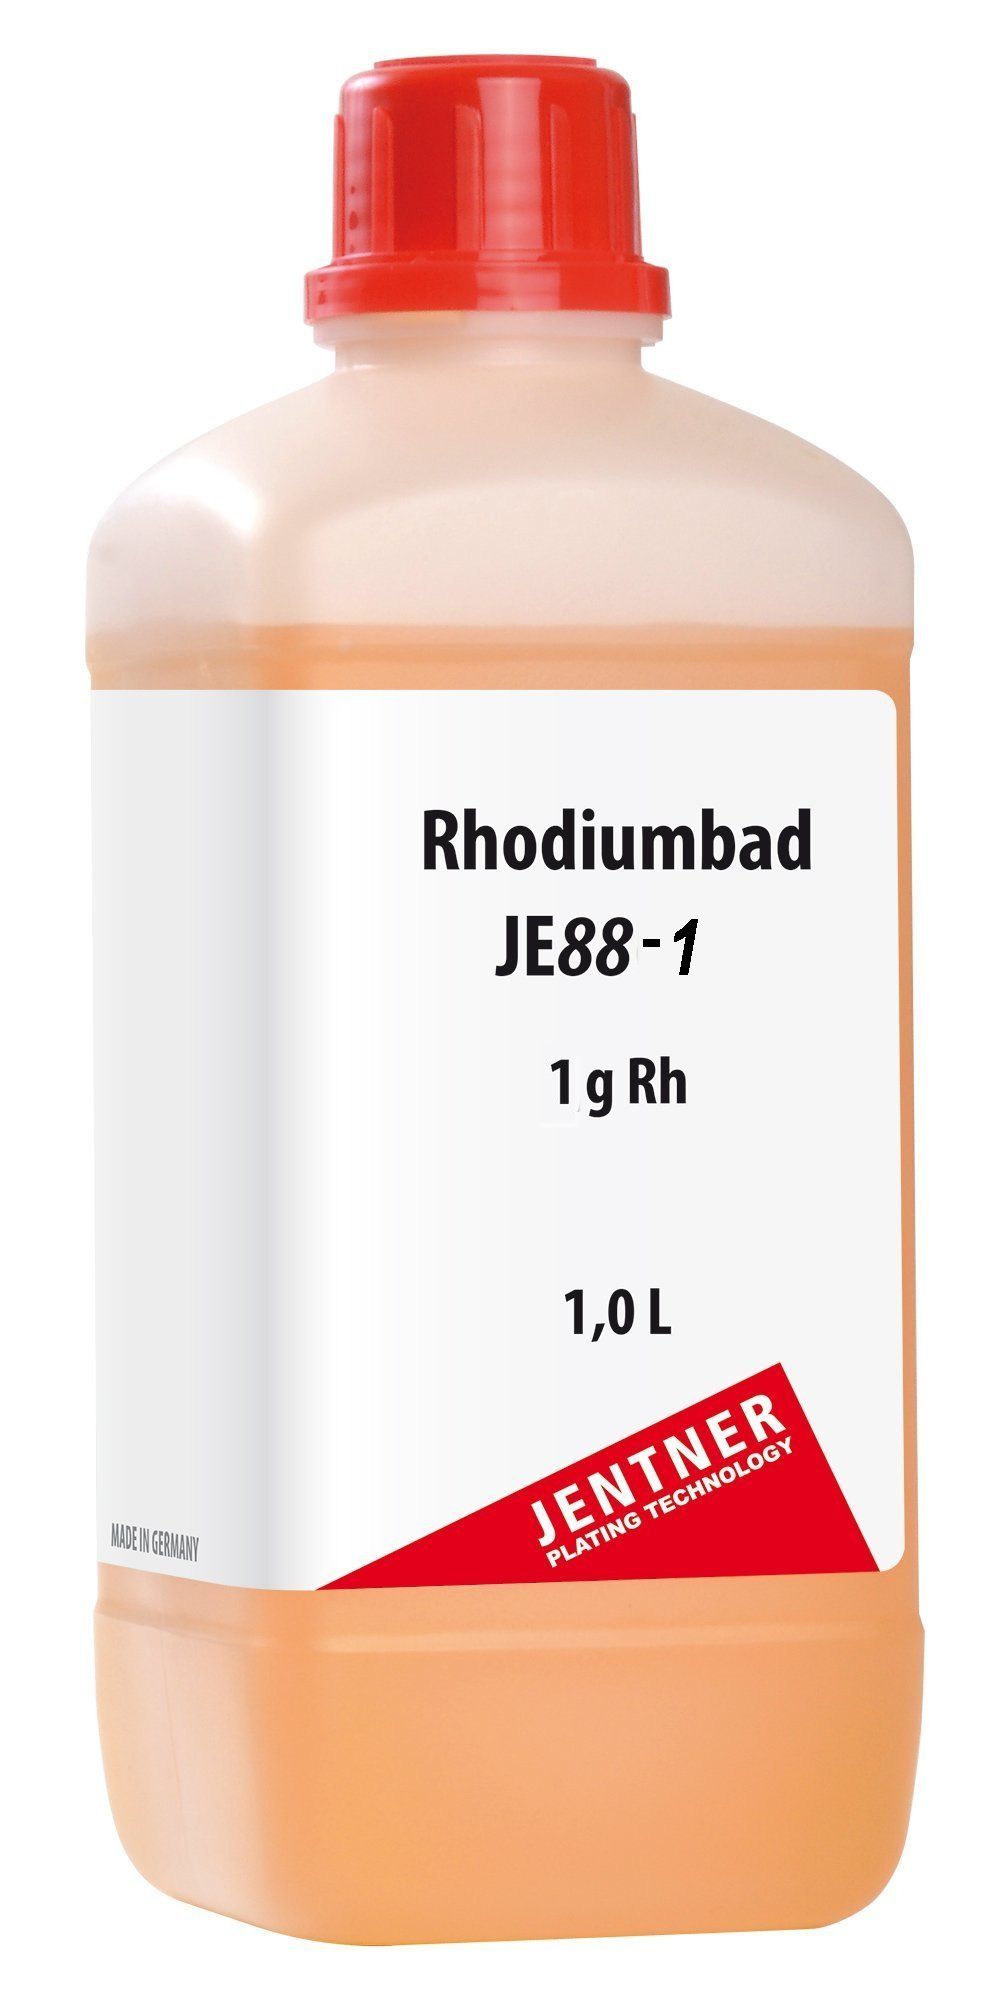 Rhodium bath JE88-1 CLEAN - 1 g/L Rh